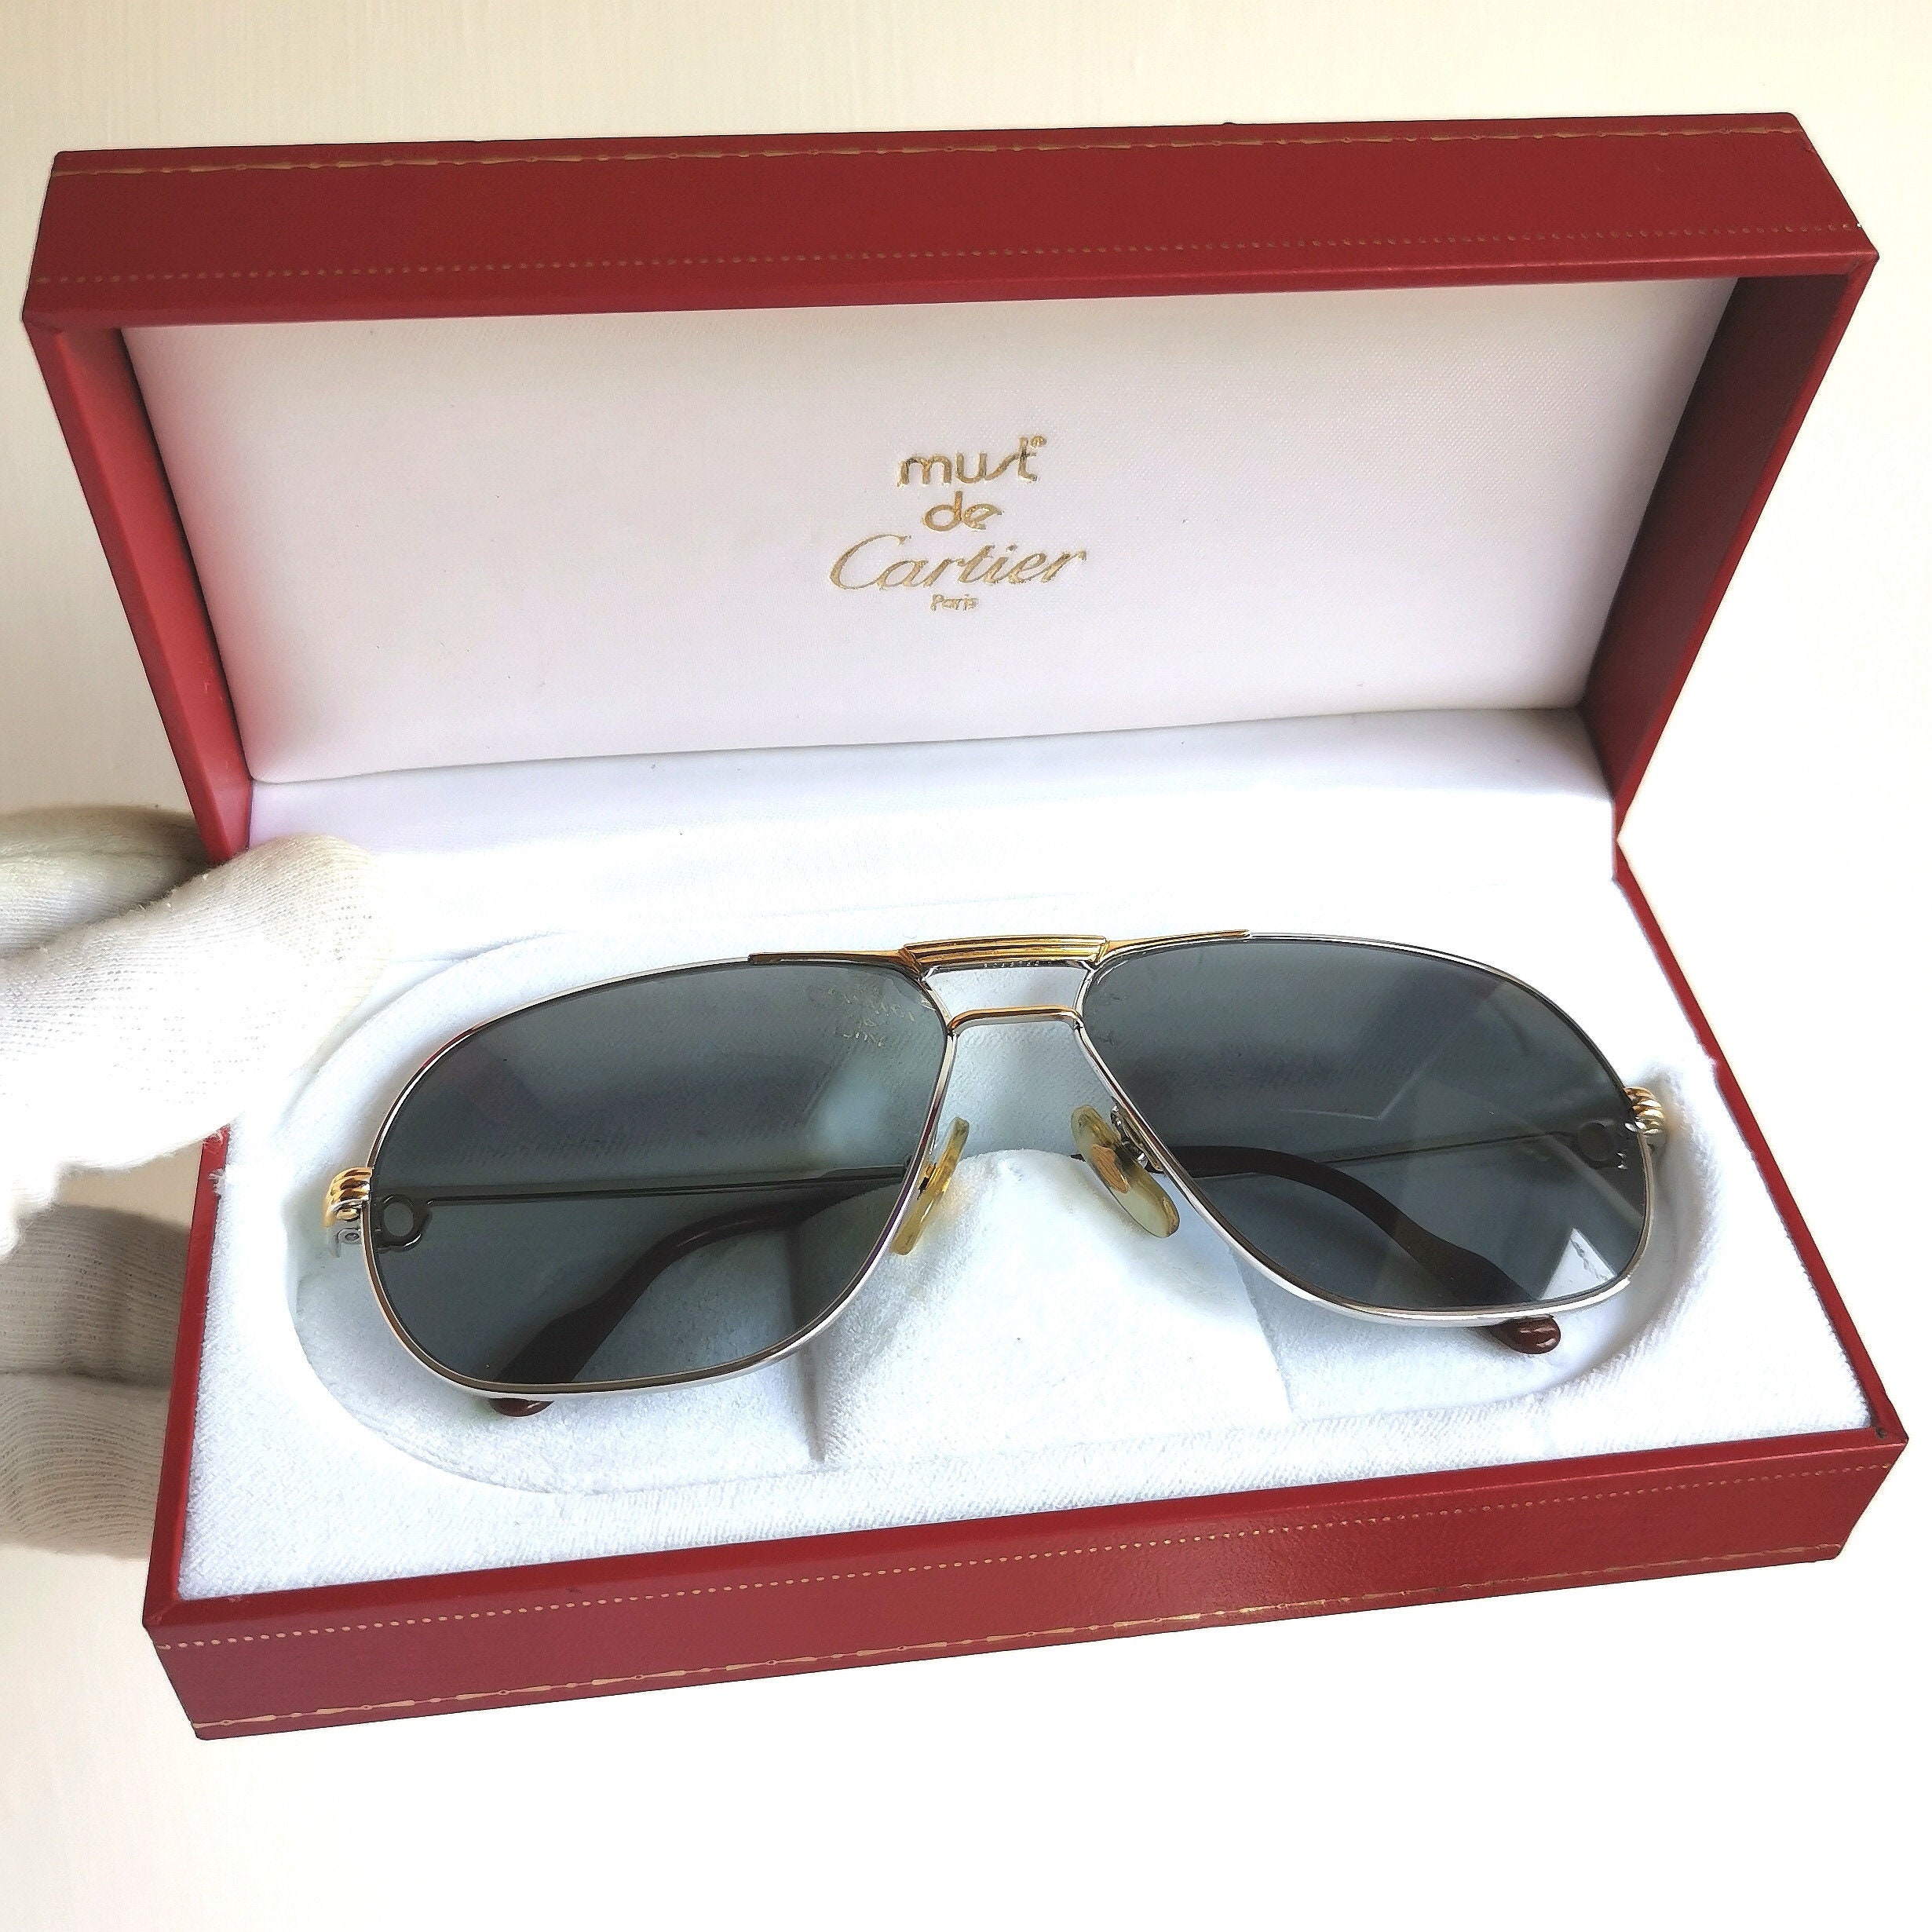 Chanel Fall 2019 Silver Eye Glasses  Chanel, Sunglasses, Cat eye sunglasses